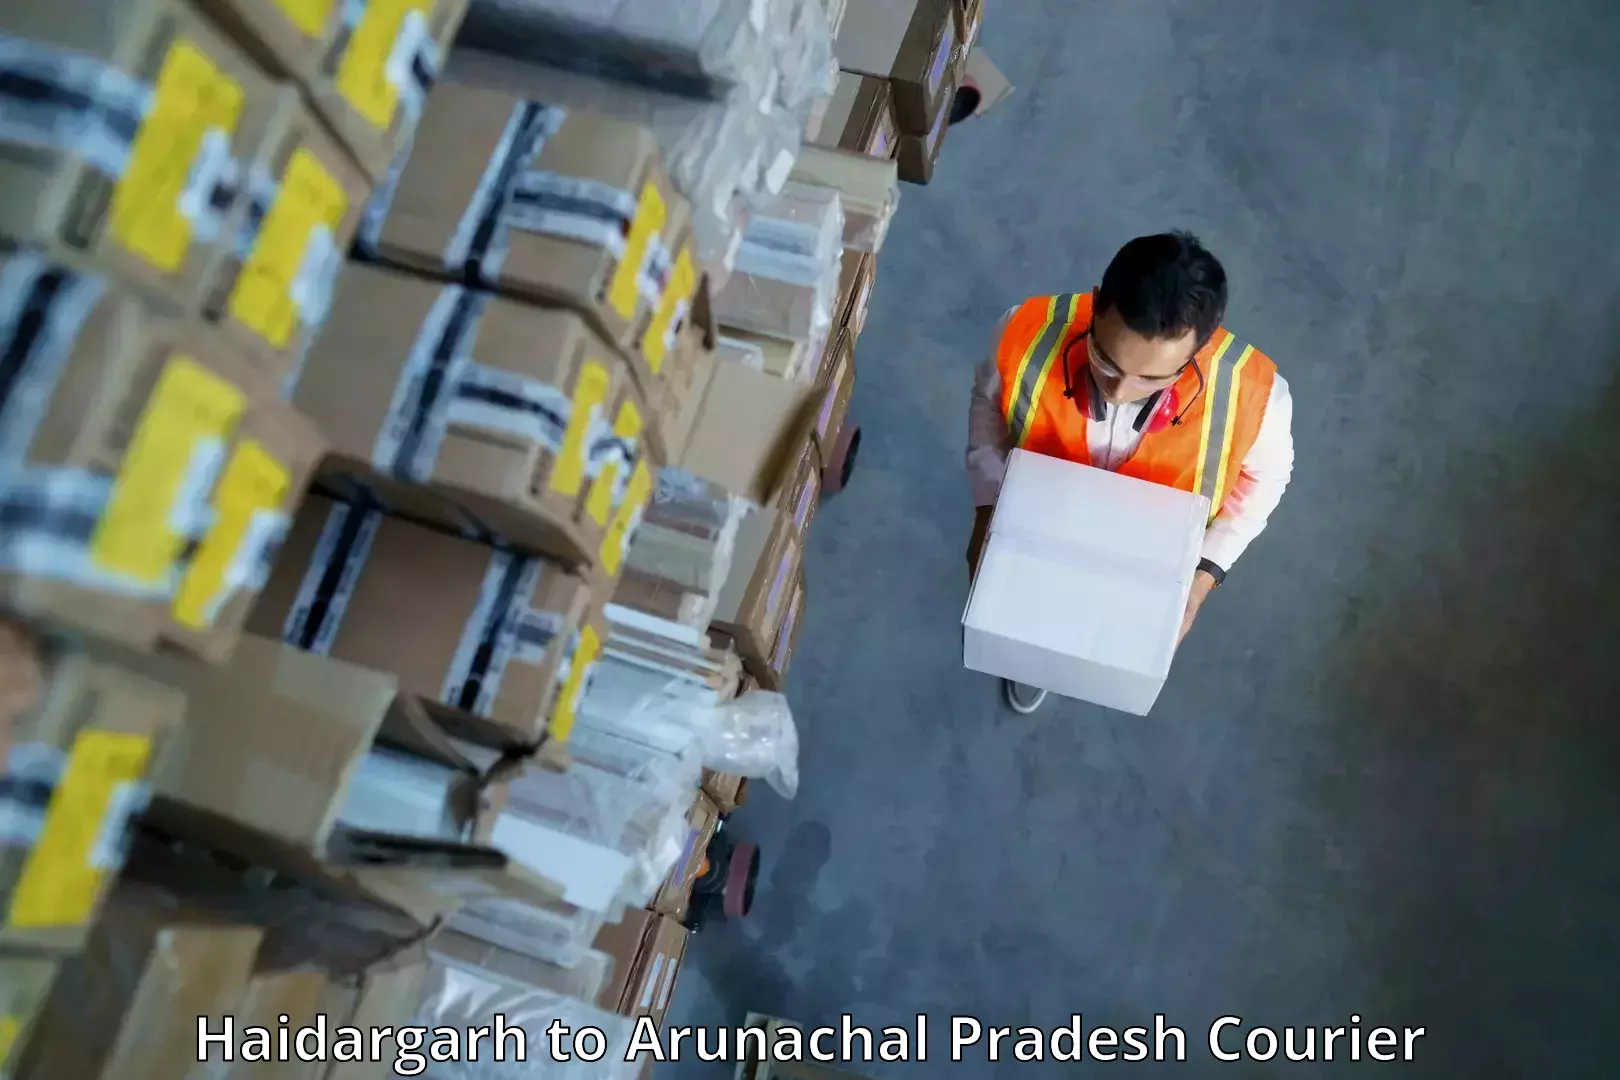 Reliable package handling Haidargarh to Lower Subansiri